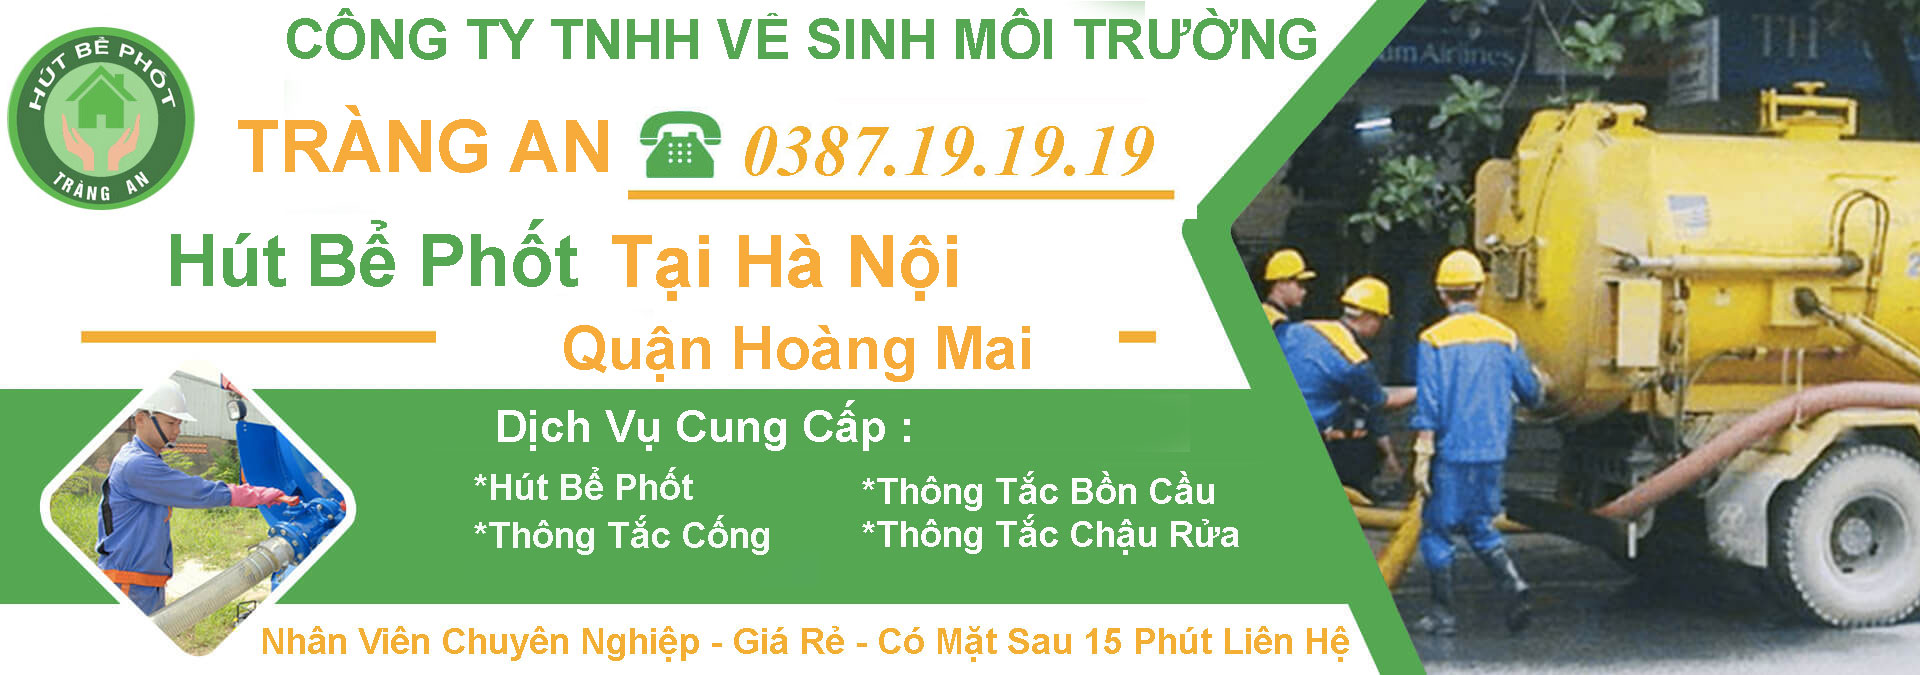 Thong Tac Cong Ha Noi Hoang Mai